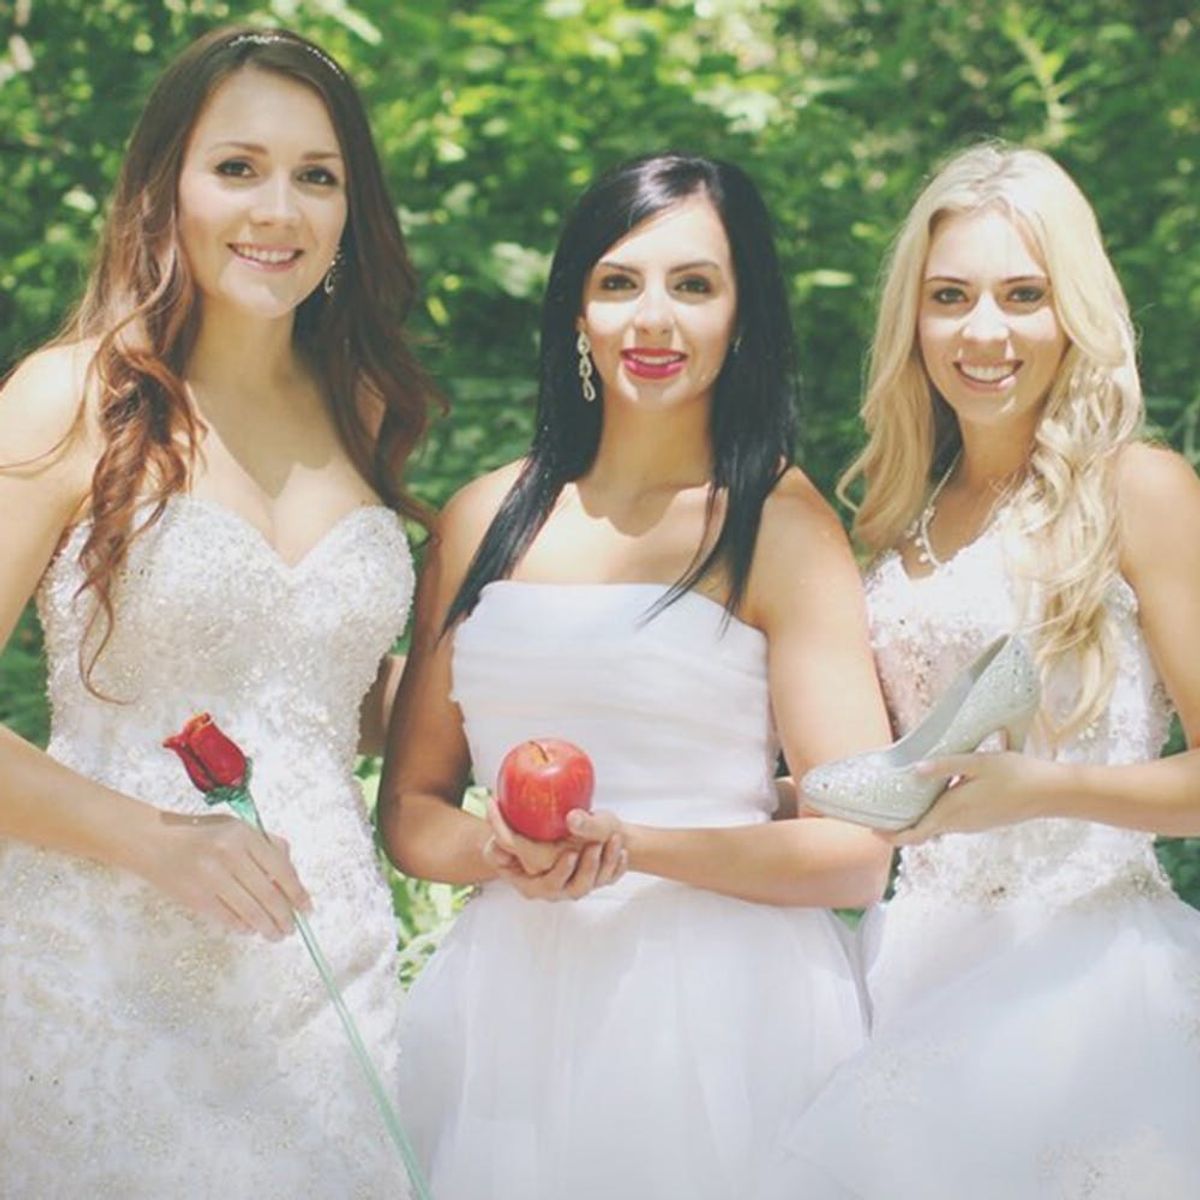 Meet the 3 BFFs Who Had the Most Magical Disney Bridal Shoot